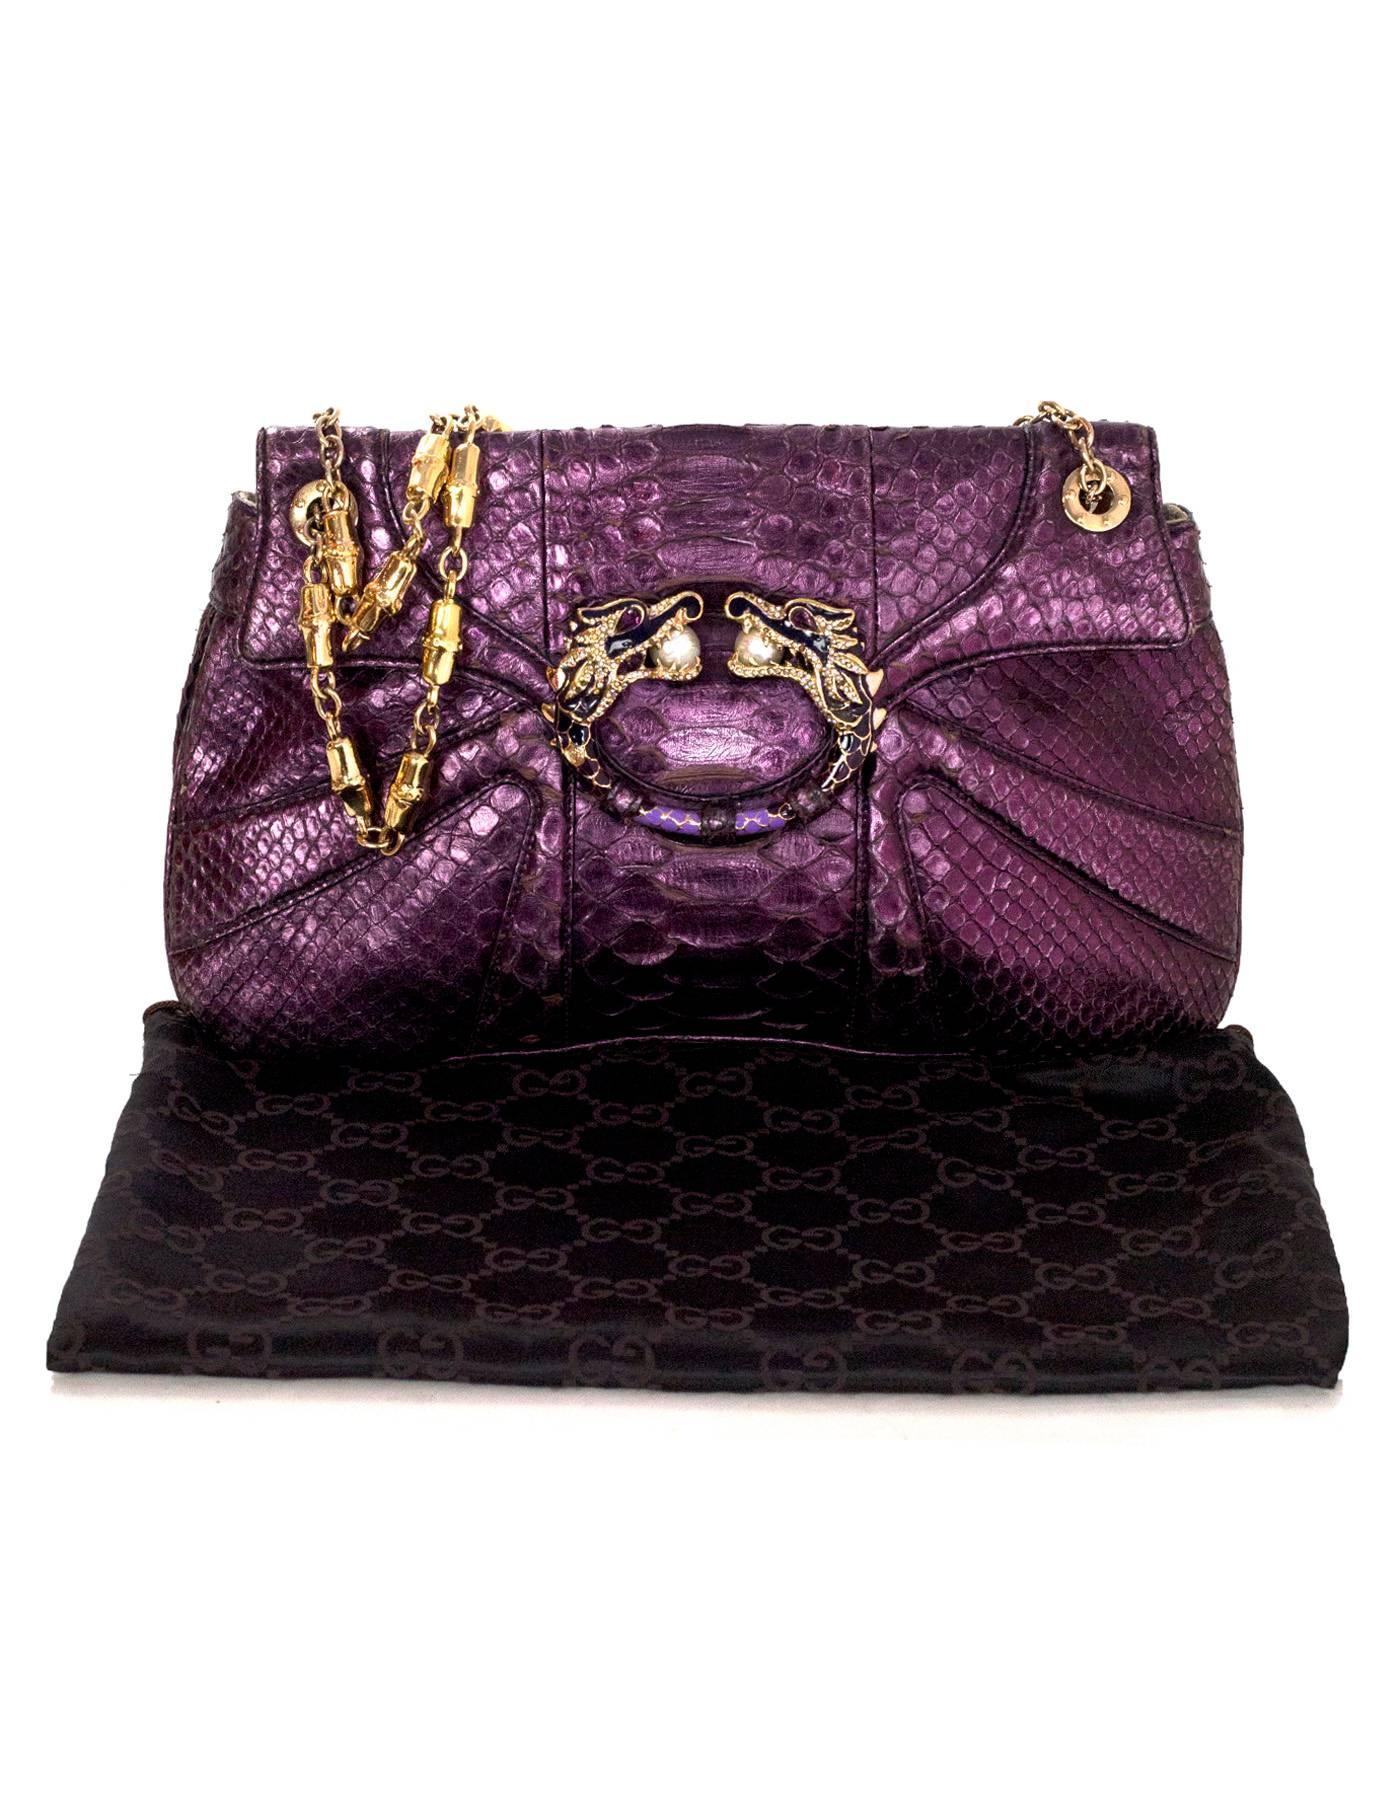 Gucci Tom Ford Purple Python Jeweled Dragon Bag 2